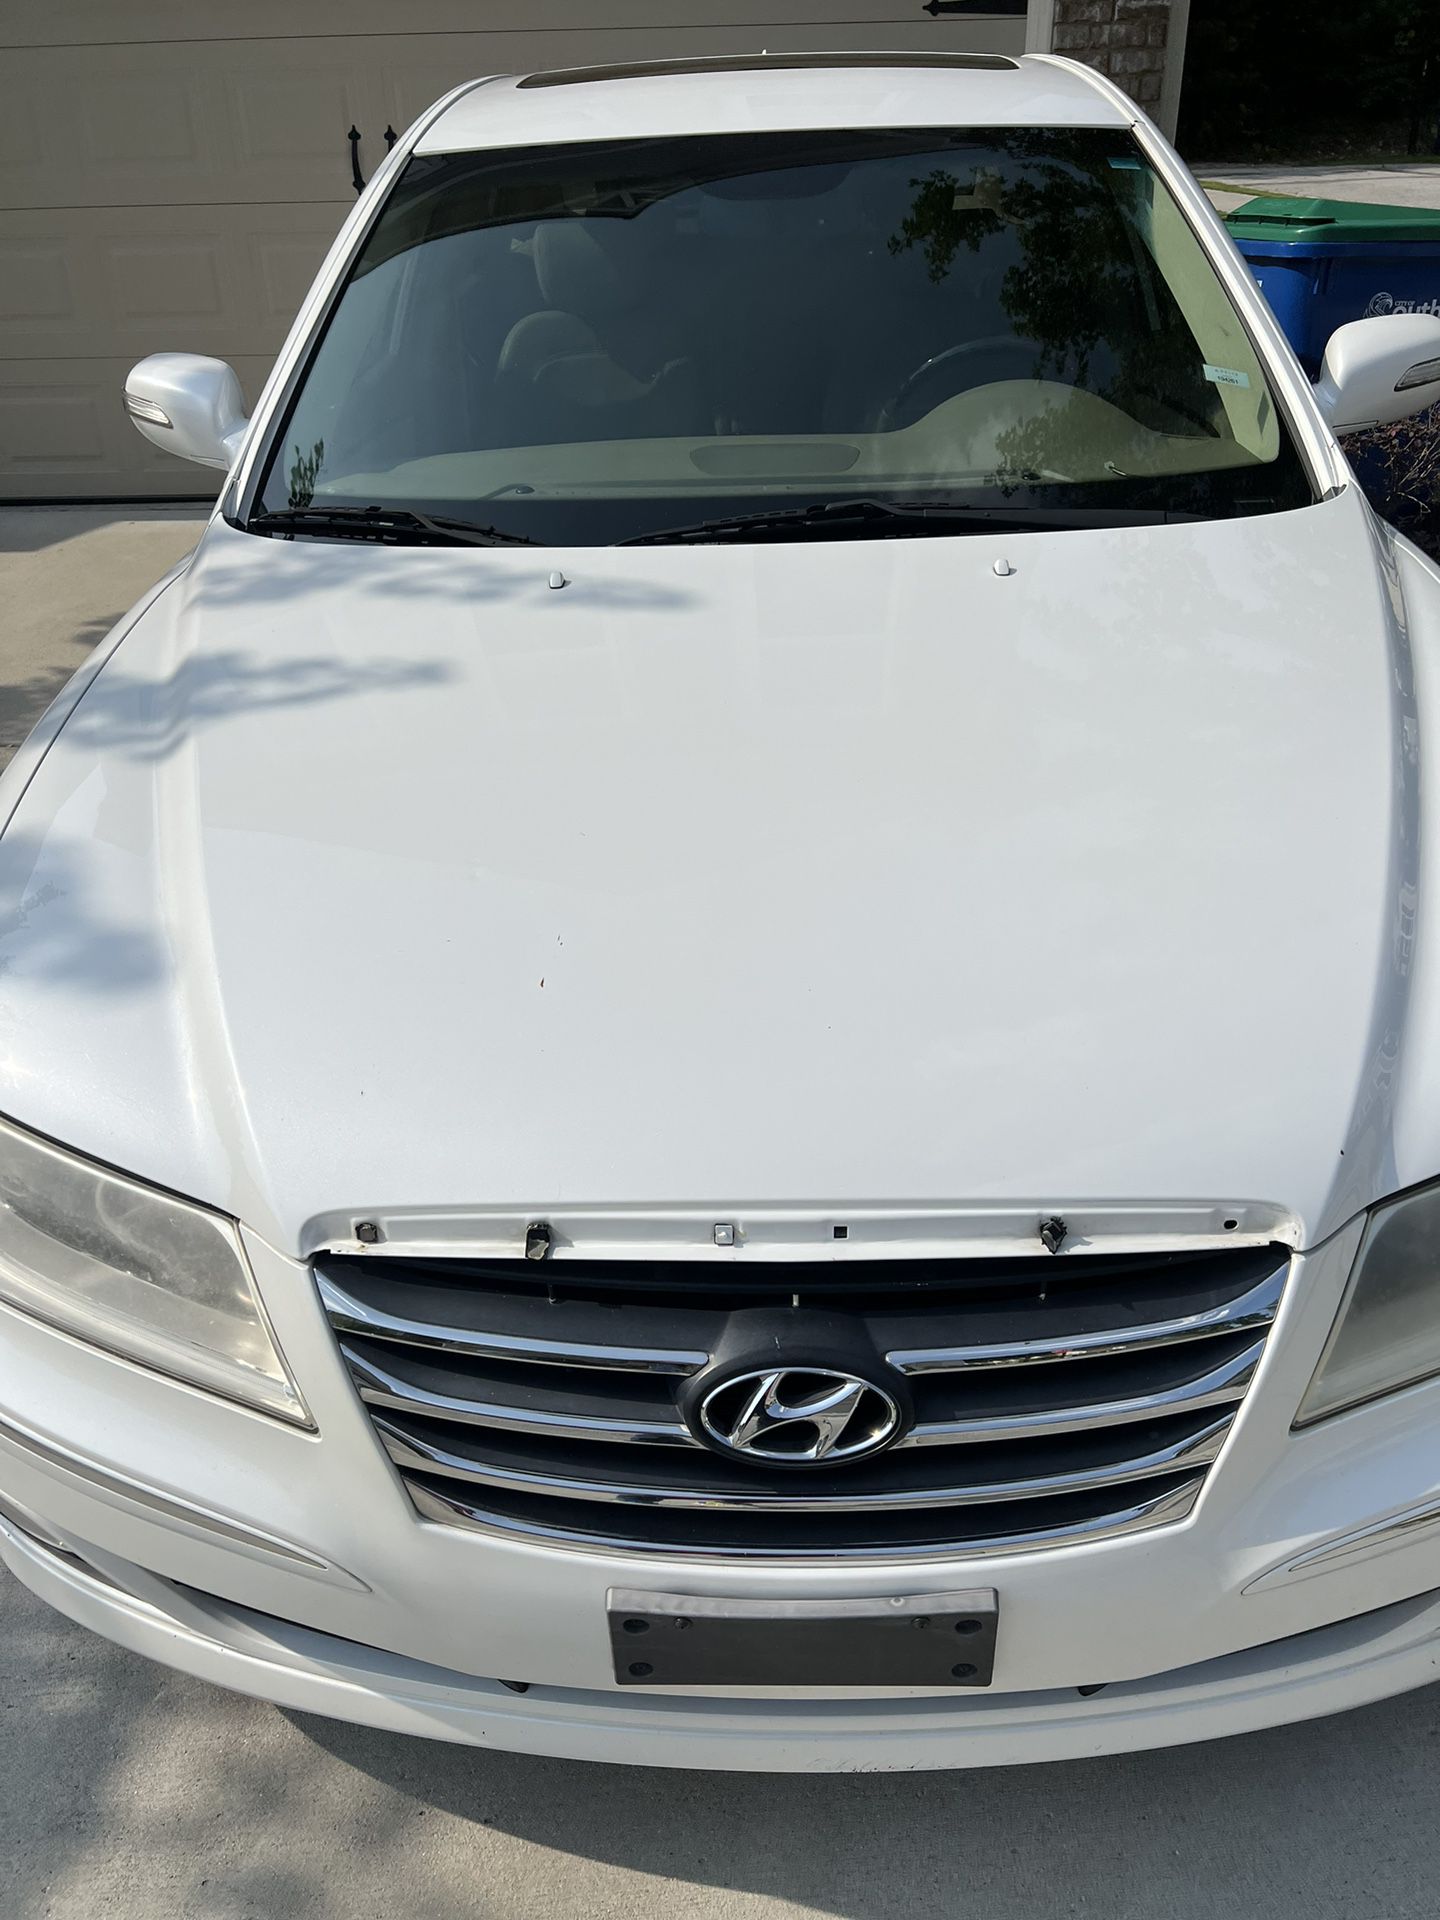 2011 Hyundai Azera